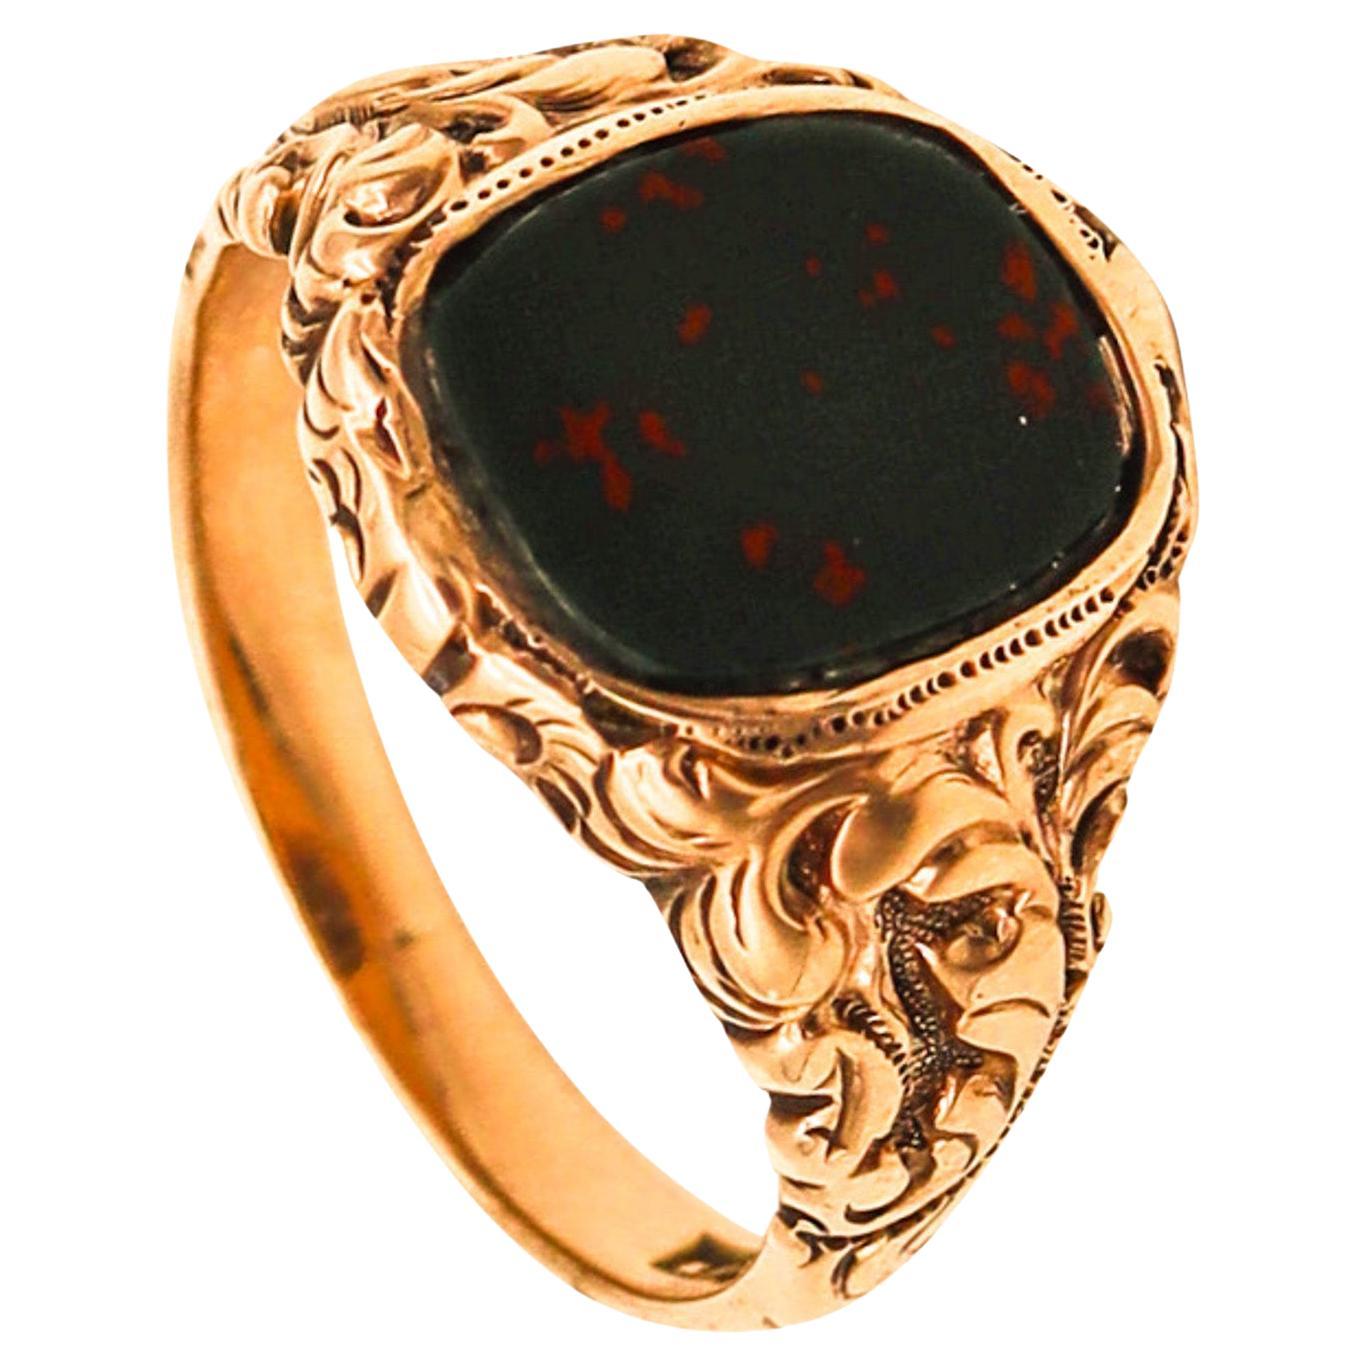 Allsopp-Steller 1900 Art Nouveau Signet Ring In 18Kt Gold With Oval Bloodstone For Sale